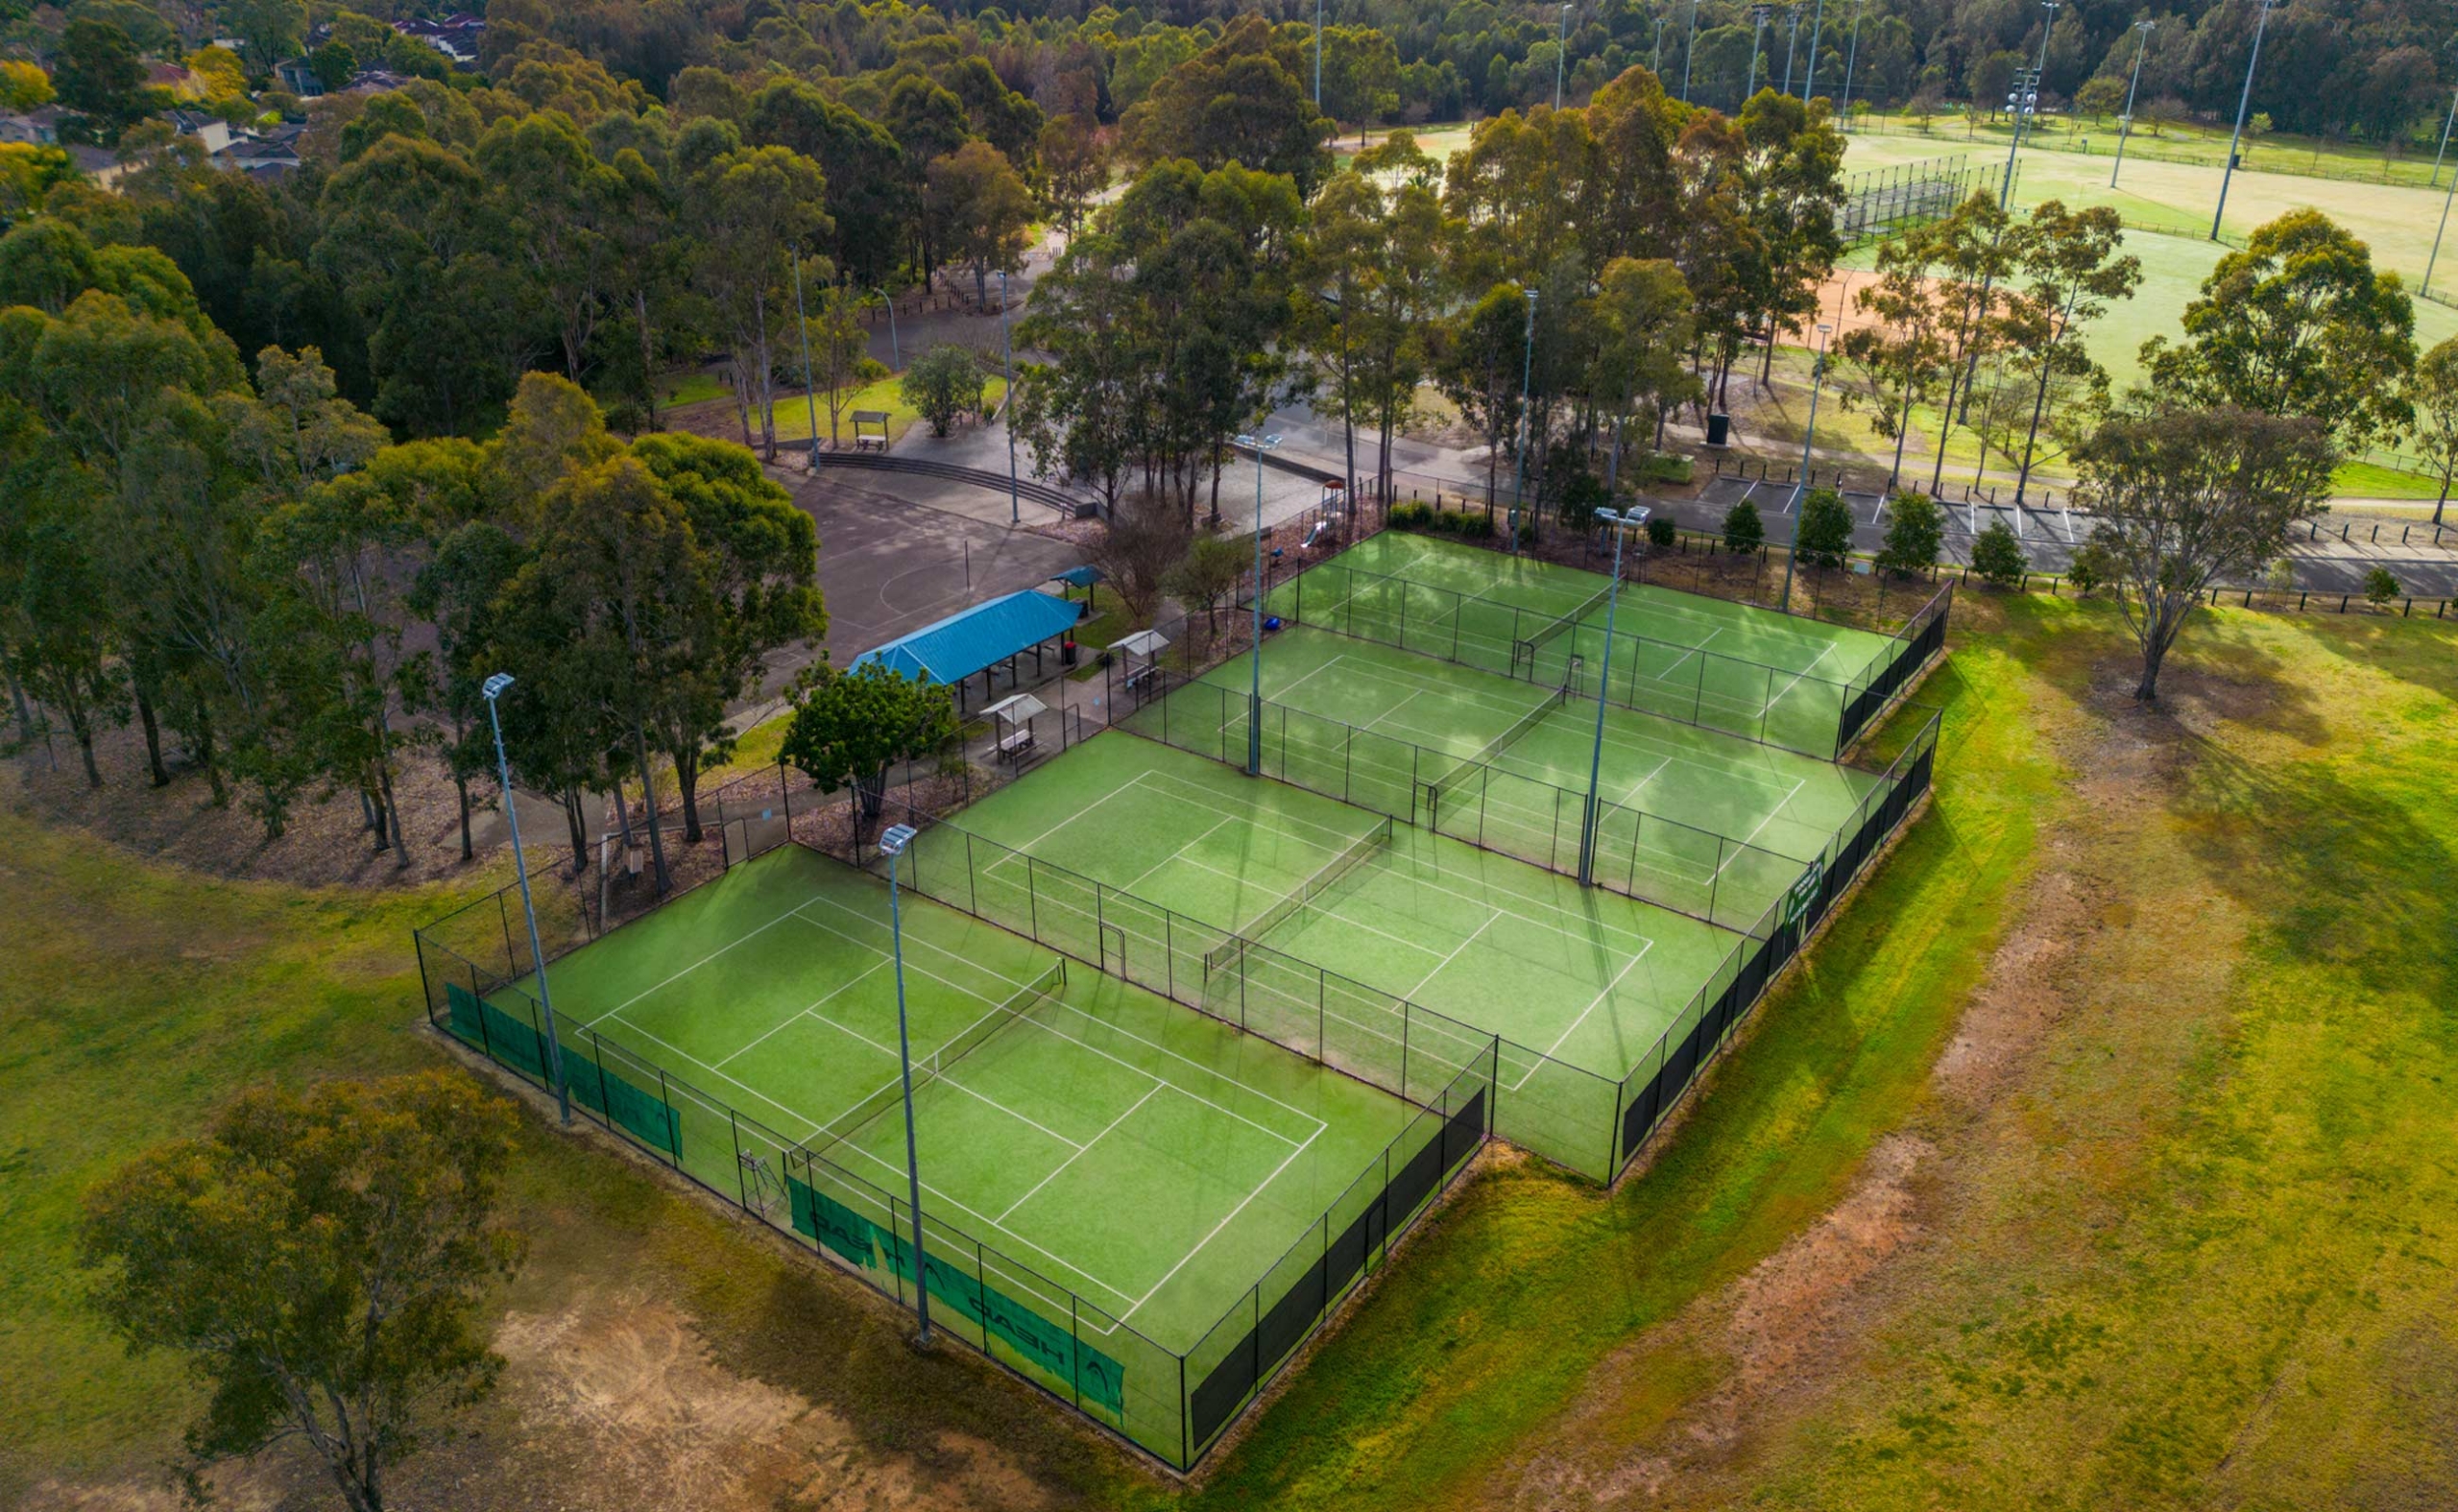 Stanhope Tennis Courts